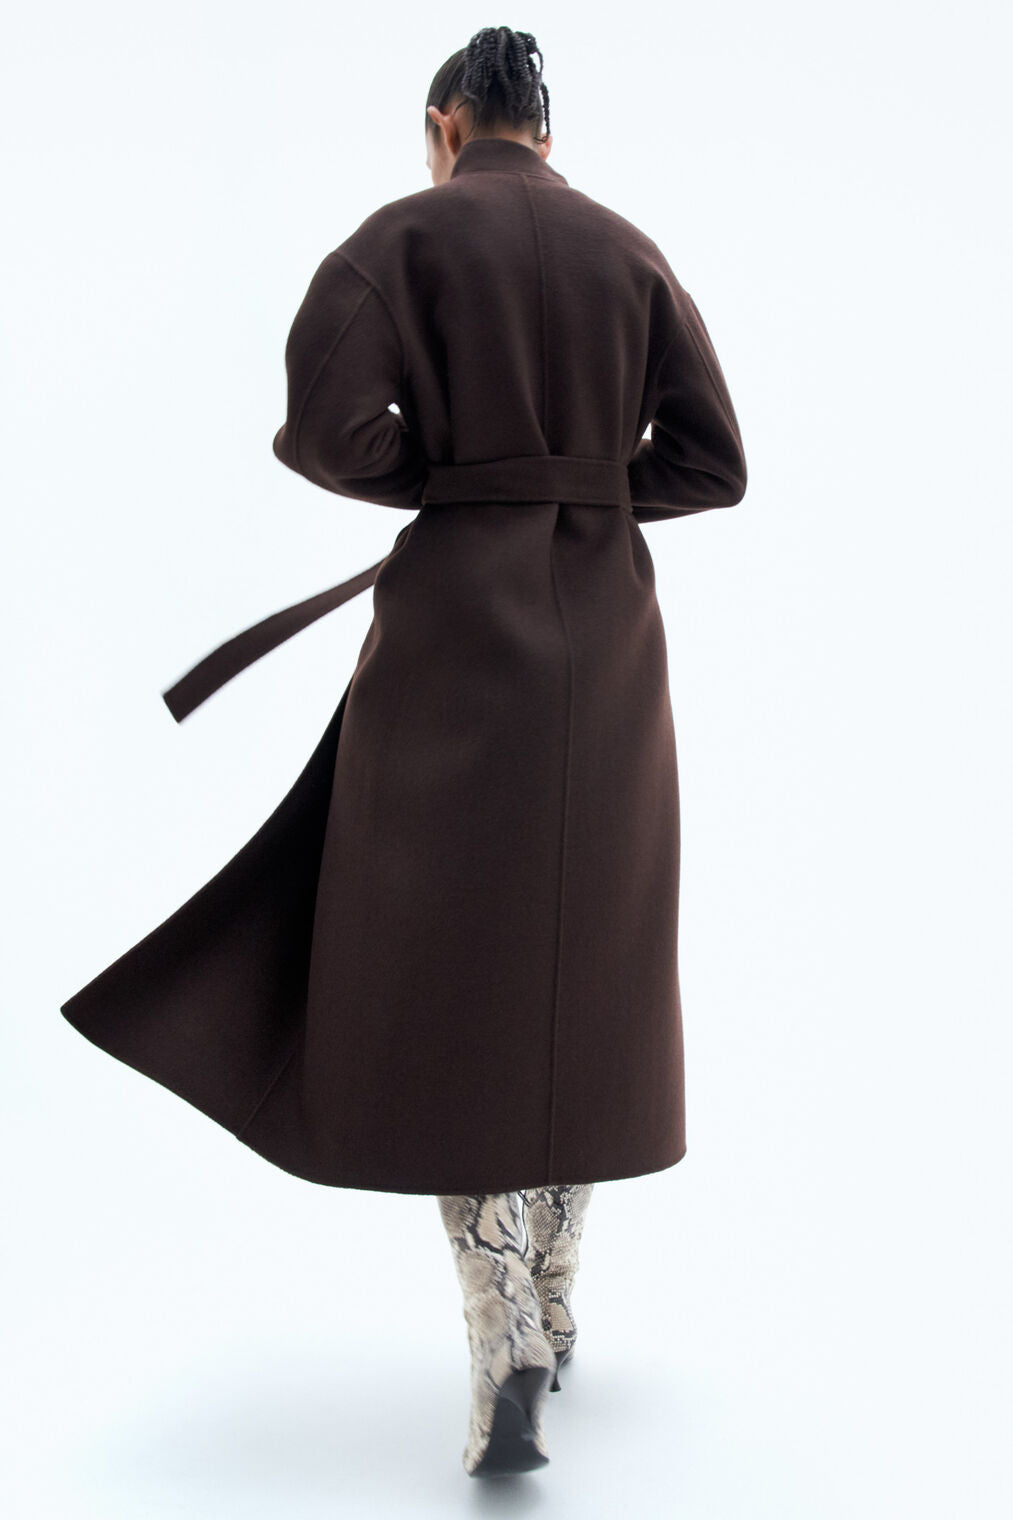 Alexa wool coat in dark chocolate